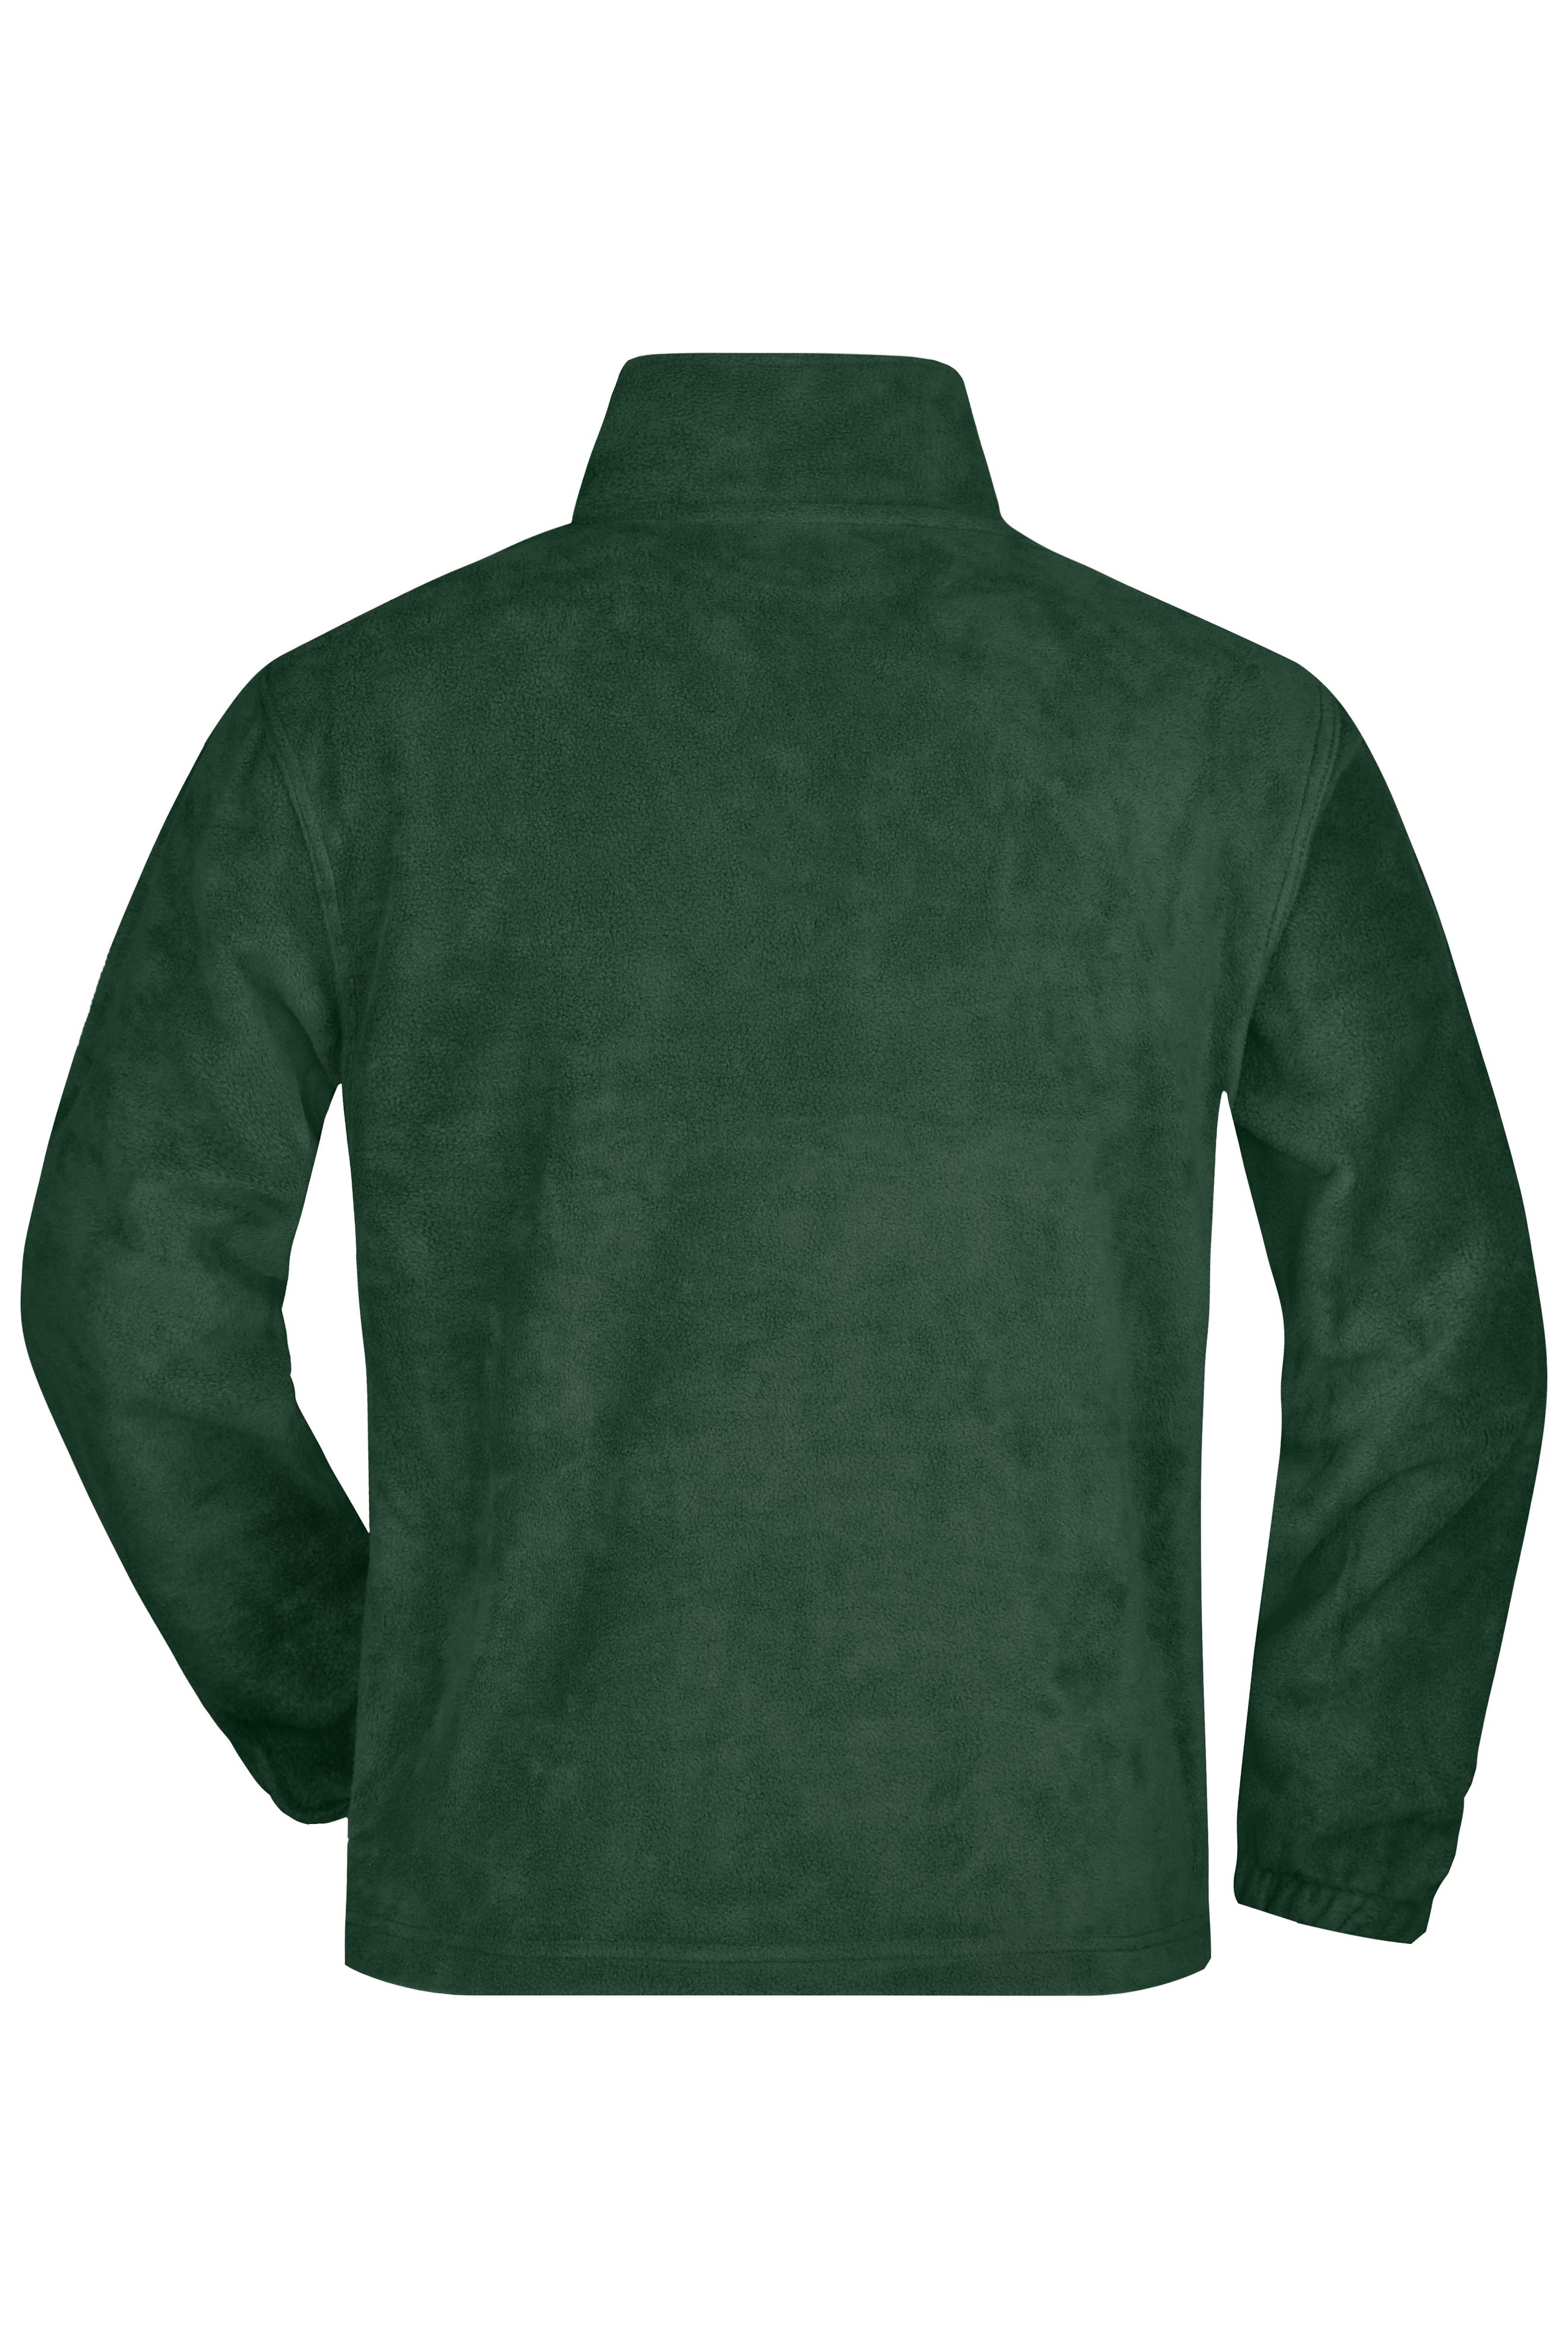 Unisex Half-Zip Fleece Dark-green-Daiber